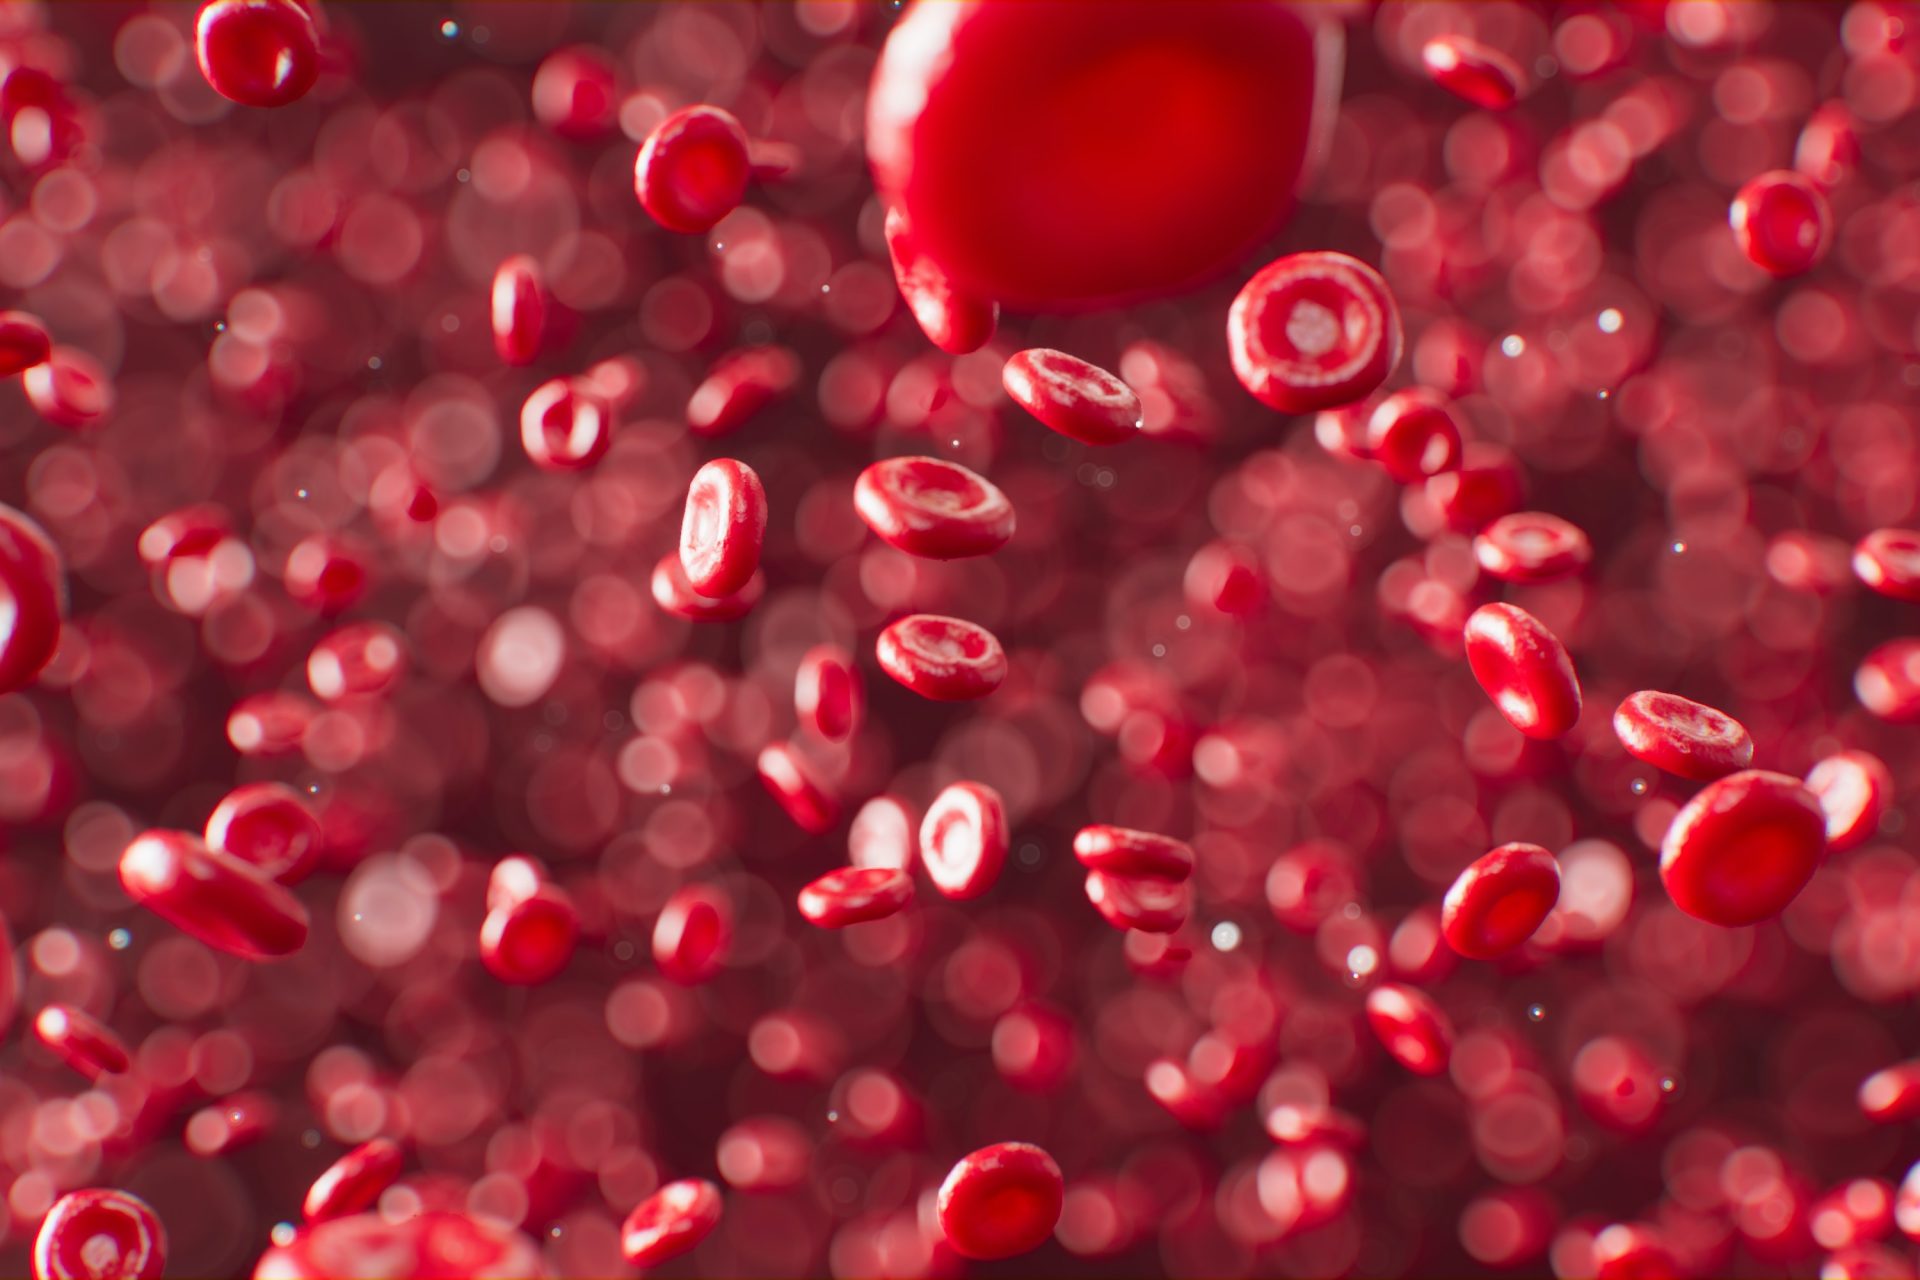 Red blood cells, hemoglobin, and heme